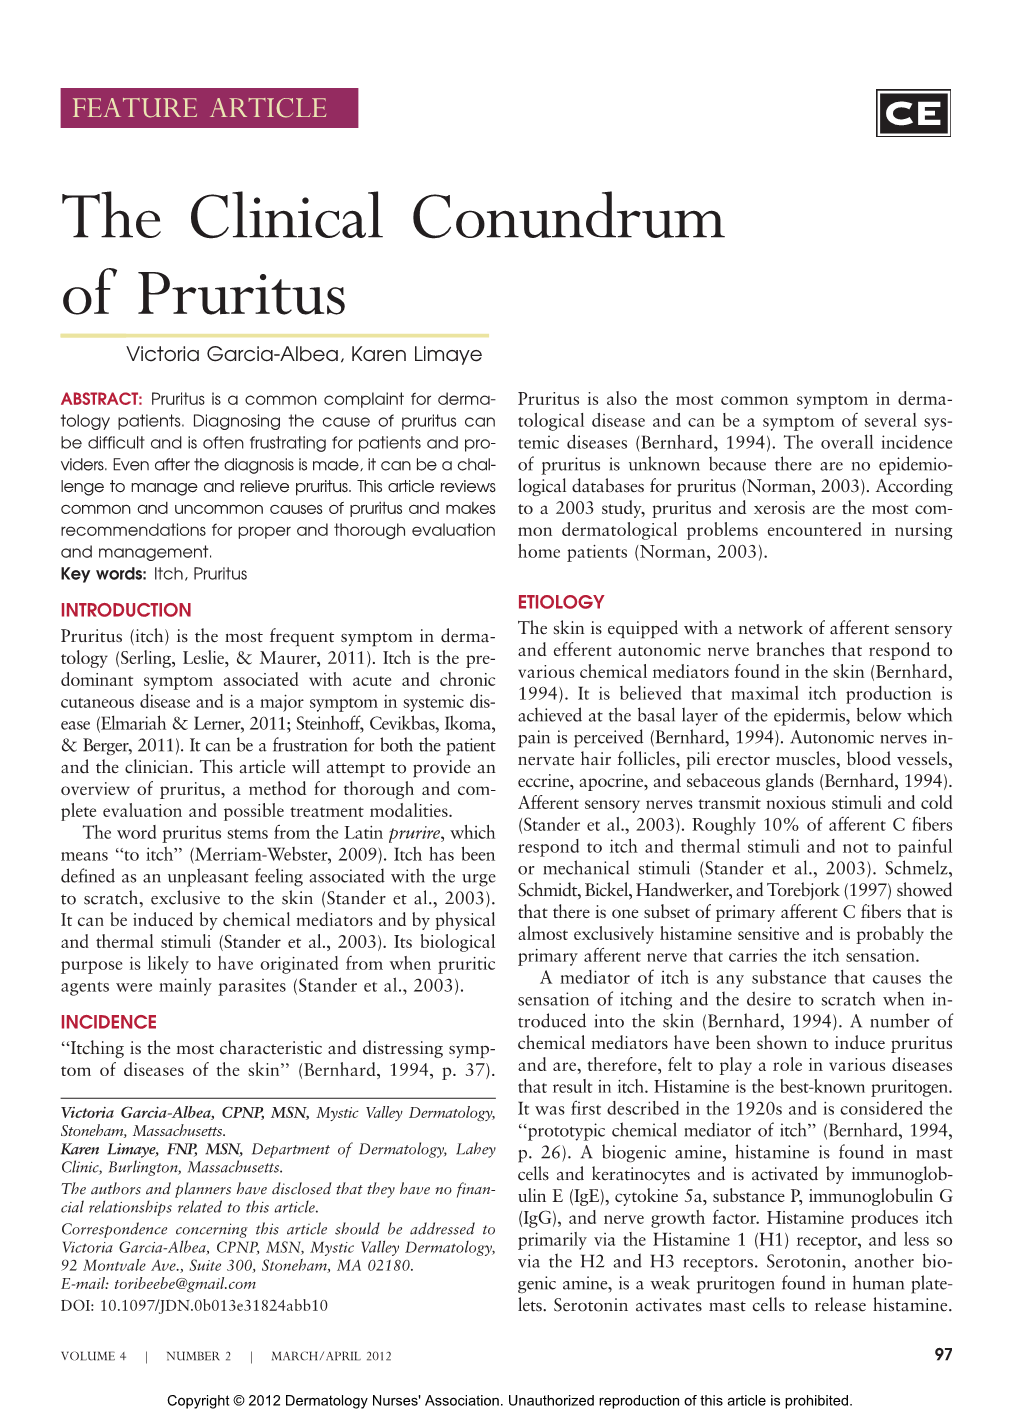 The Clinical Conundrum of Pruritus Victoria Garcia-Albea, Karen Limaye